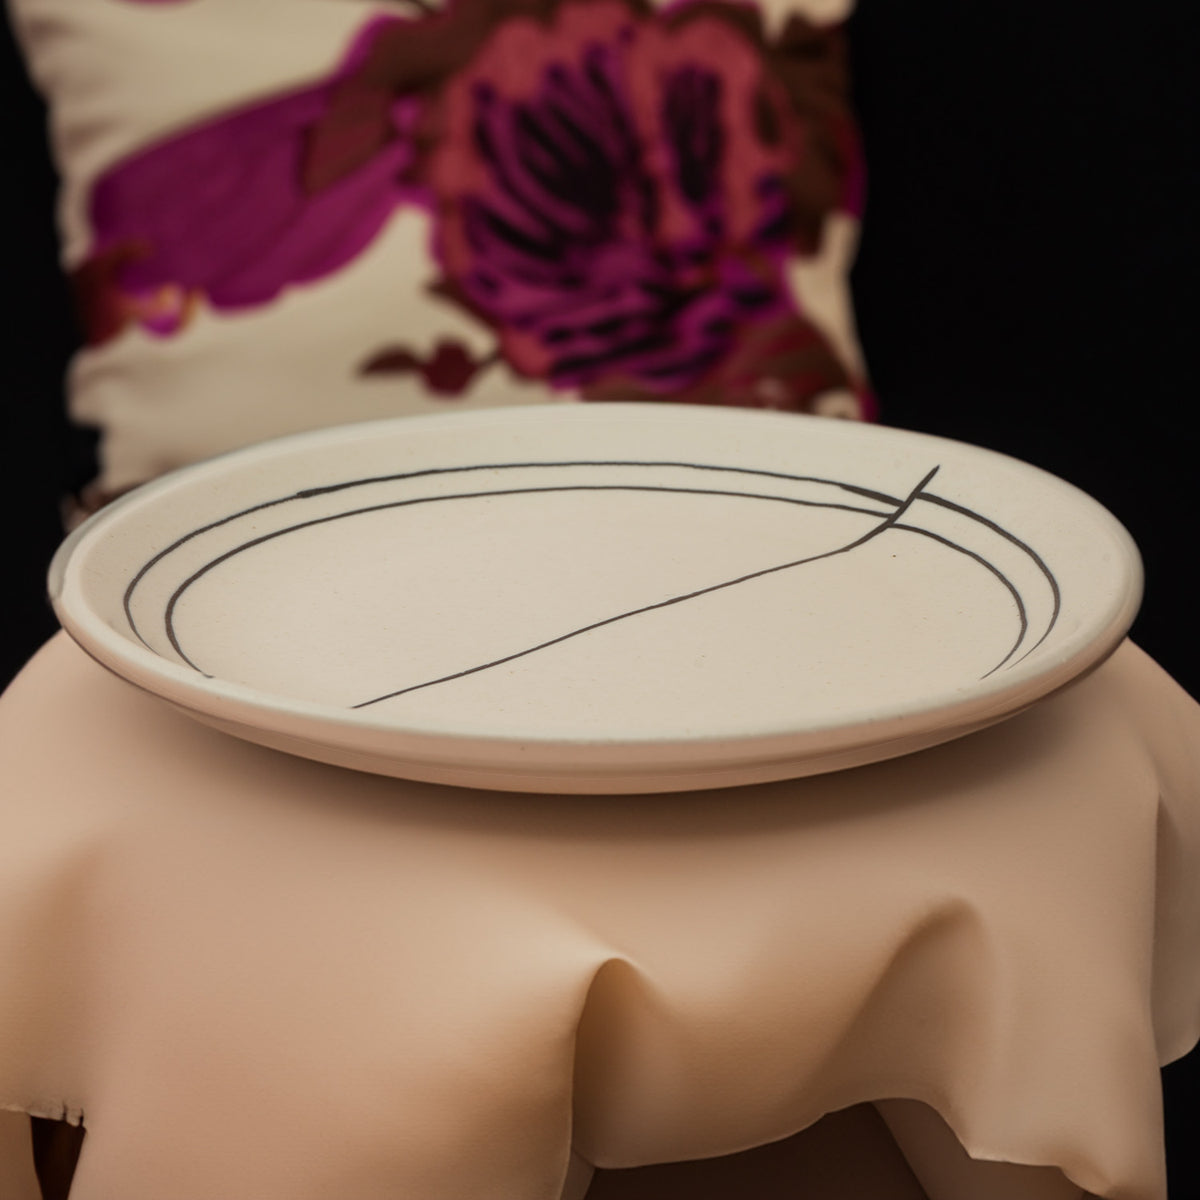 Claymistry Ceramic Off White with Black Geometric Design Dinner Plate, Matte Finish | Dishwasher, Oven & Microwave Safe | Dinnerware Serving Plate Thali | Premium Crockery